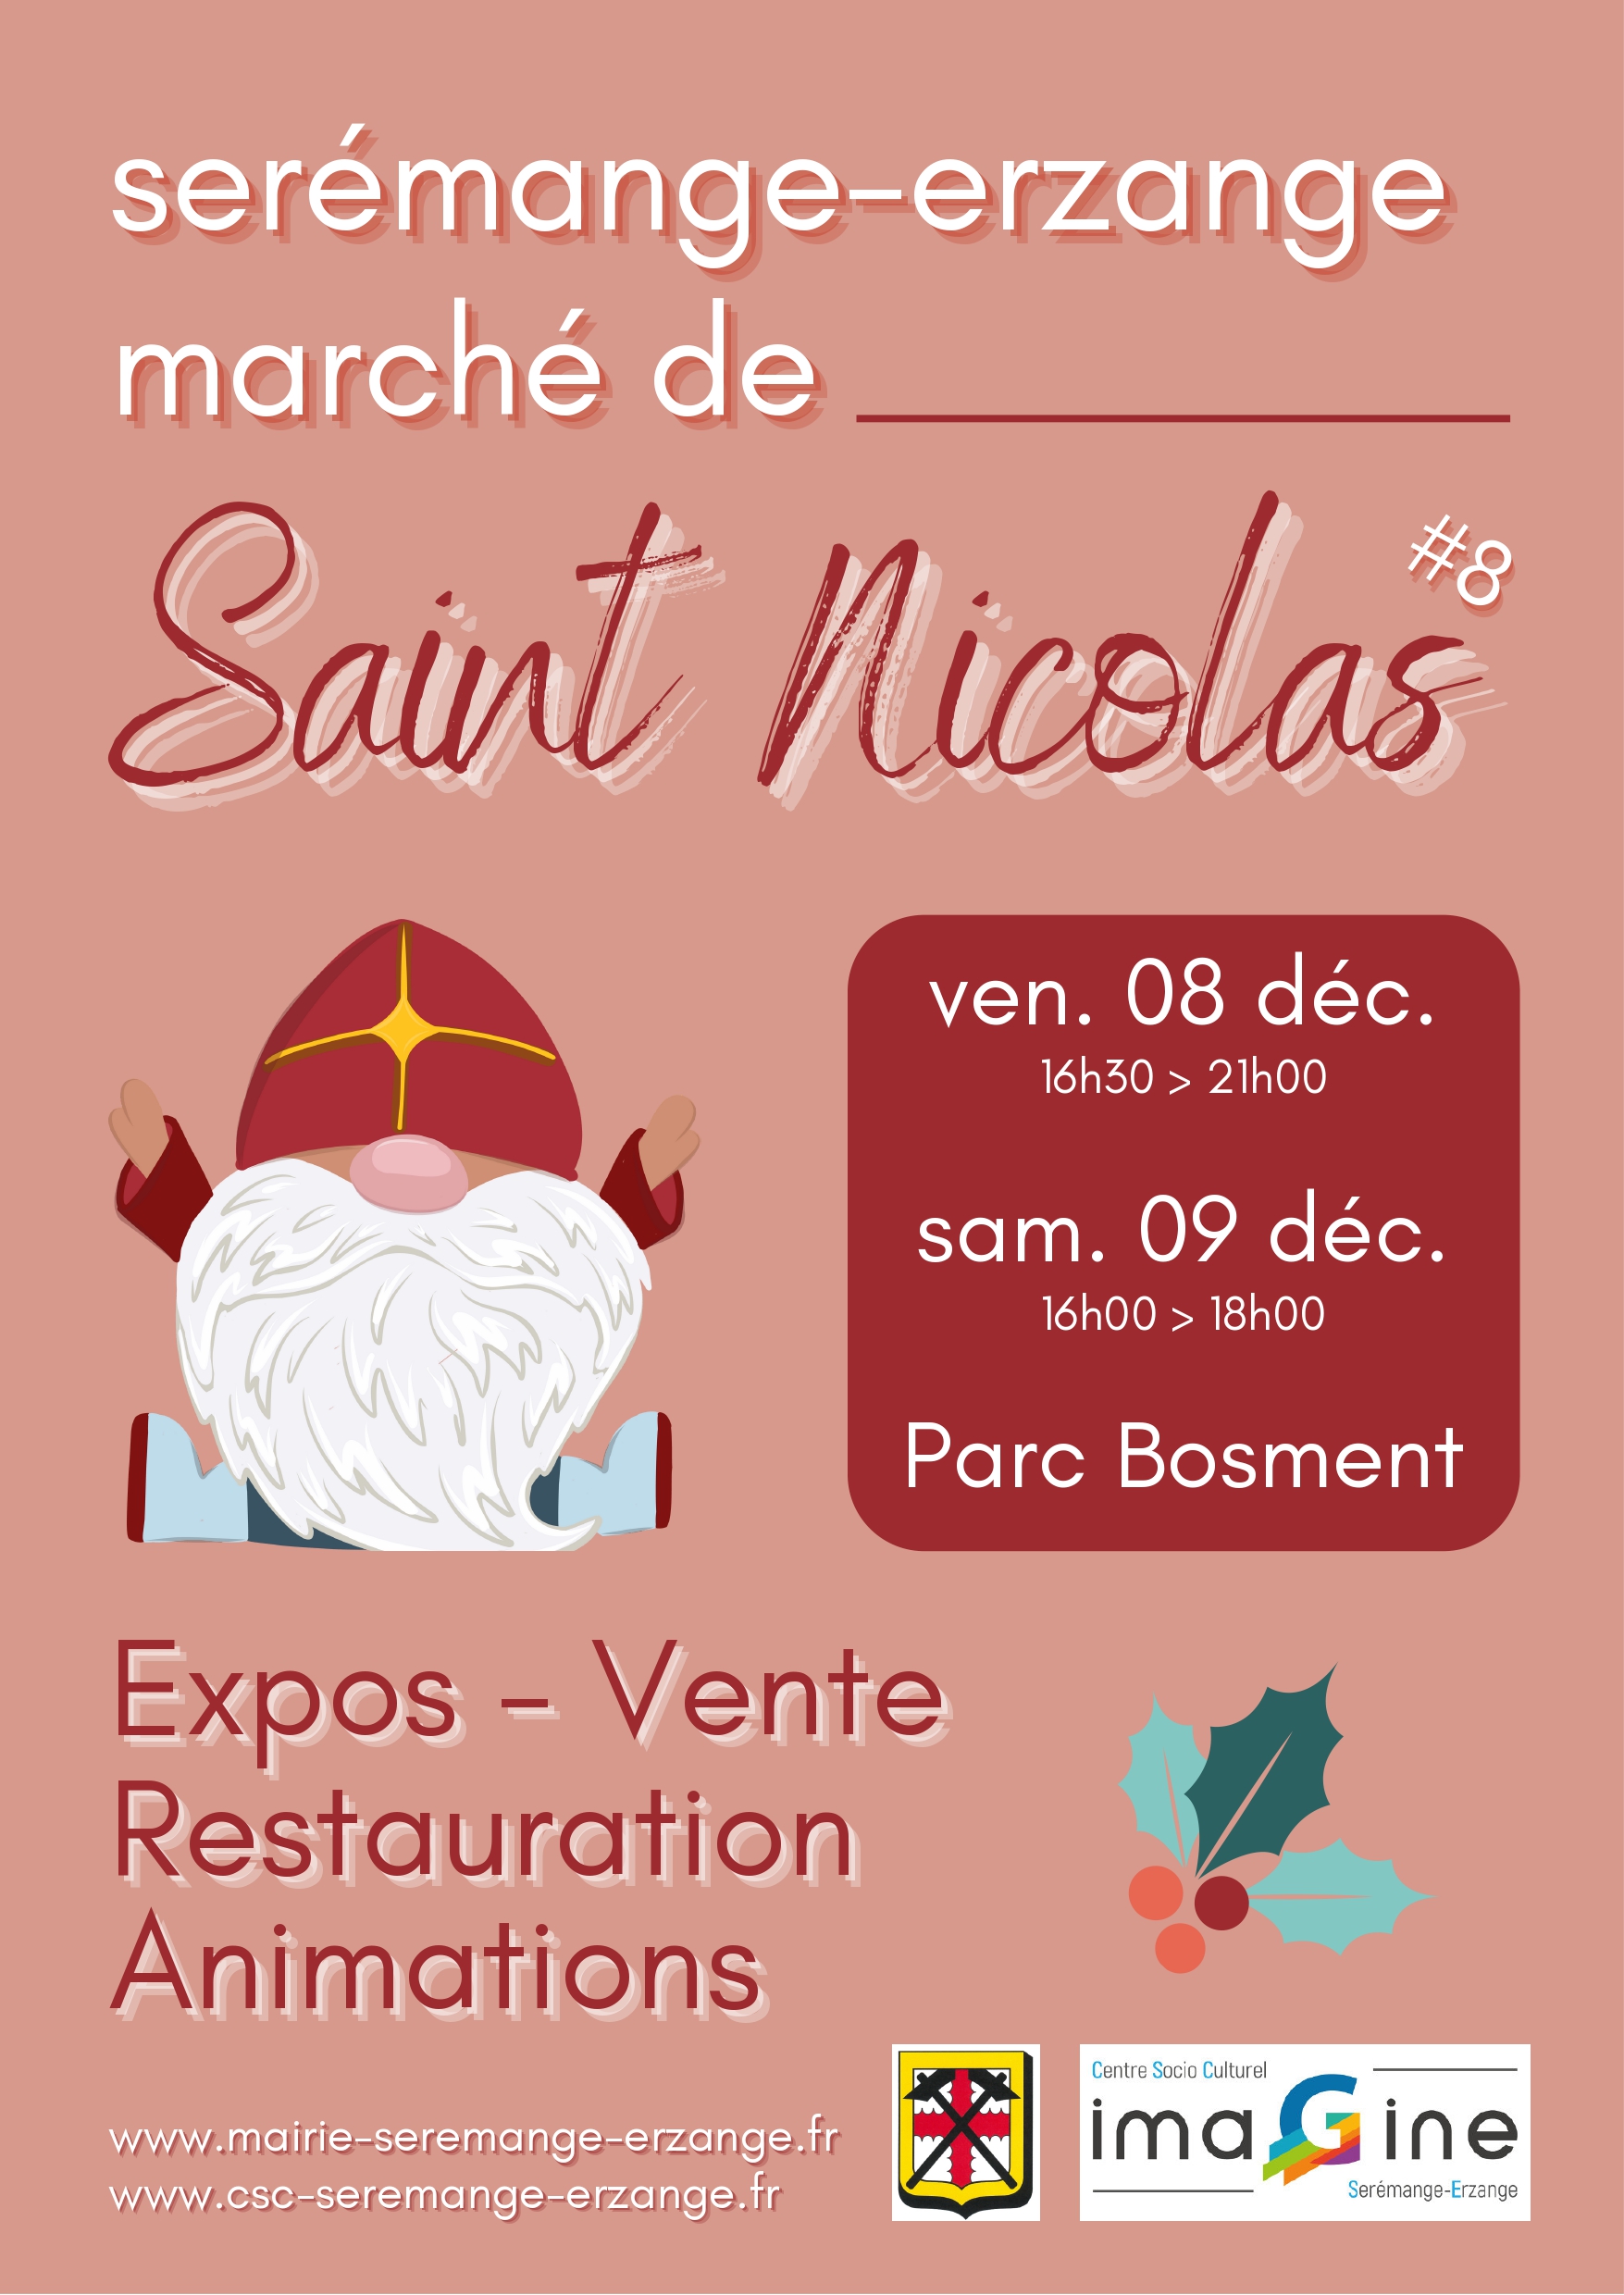 Marché de Saint Nicolas